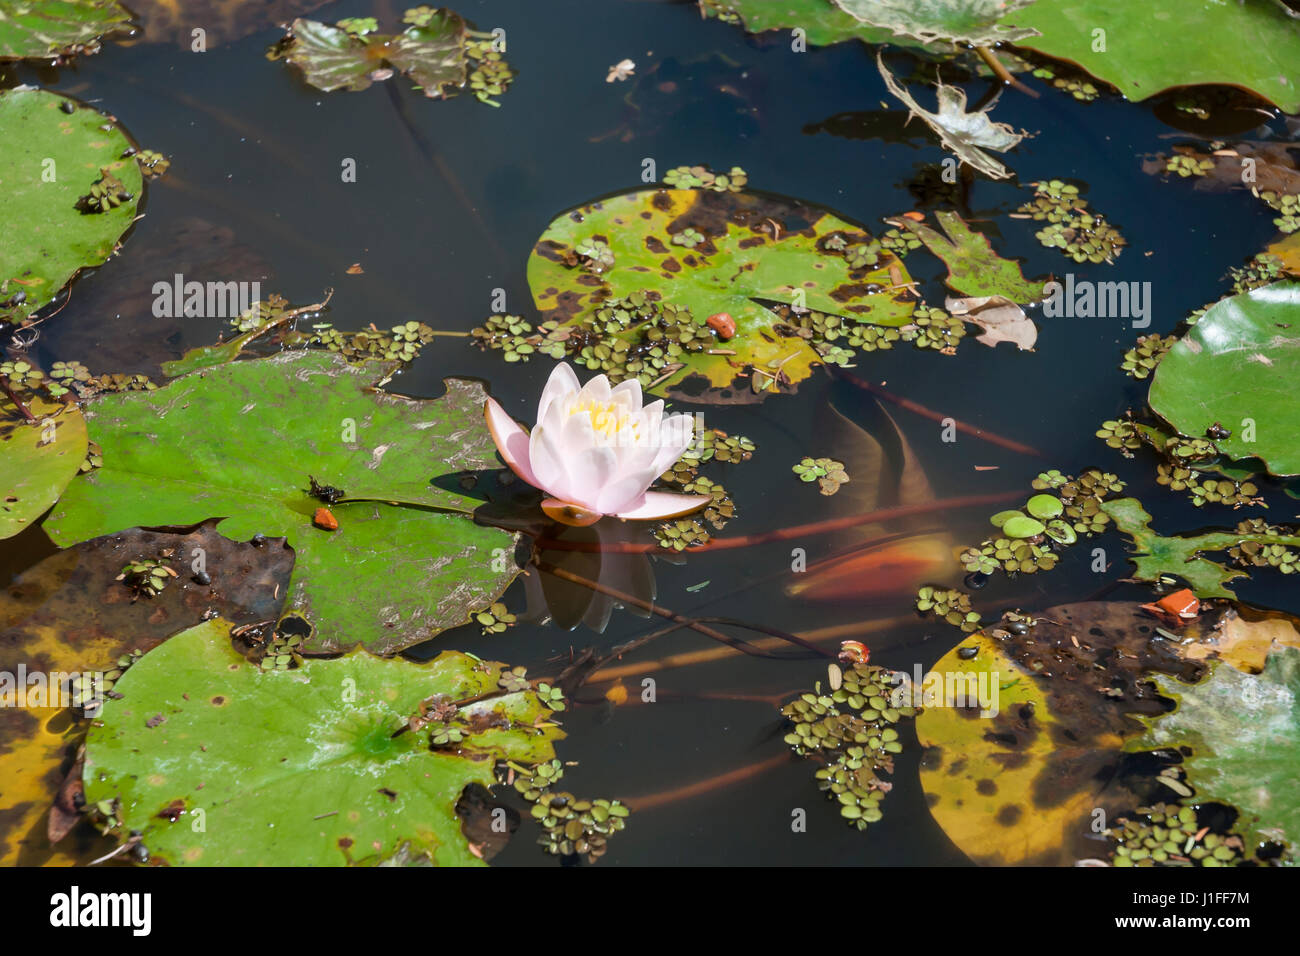 Rosa nenúfar flotando en un estanque. Nymphaea Marliacena carnea Foto de stock